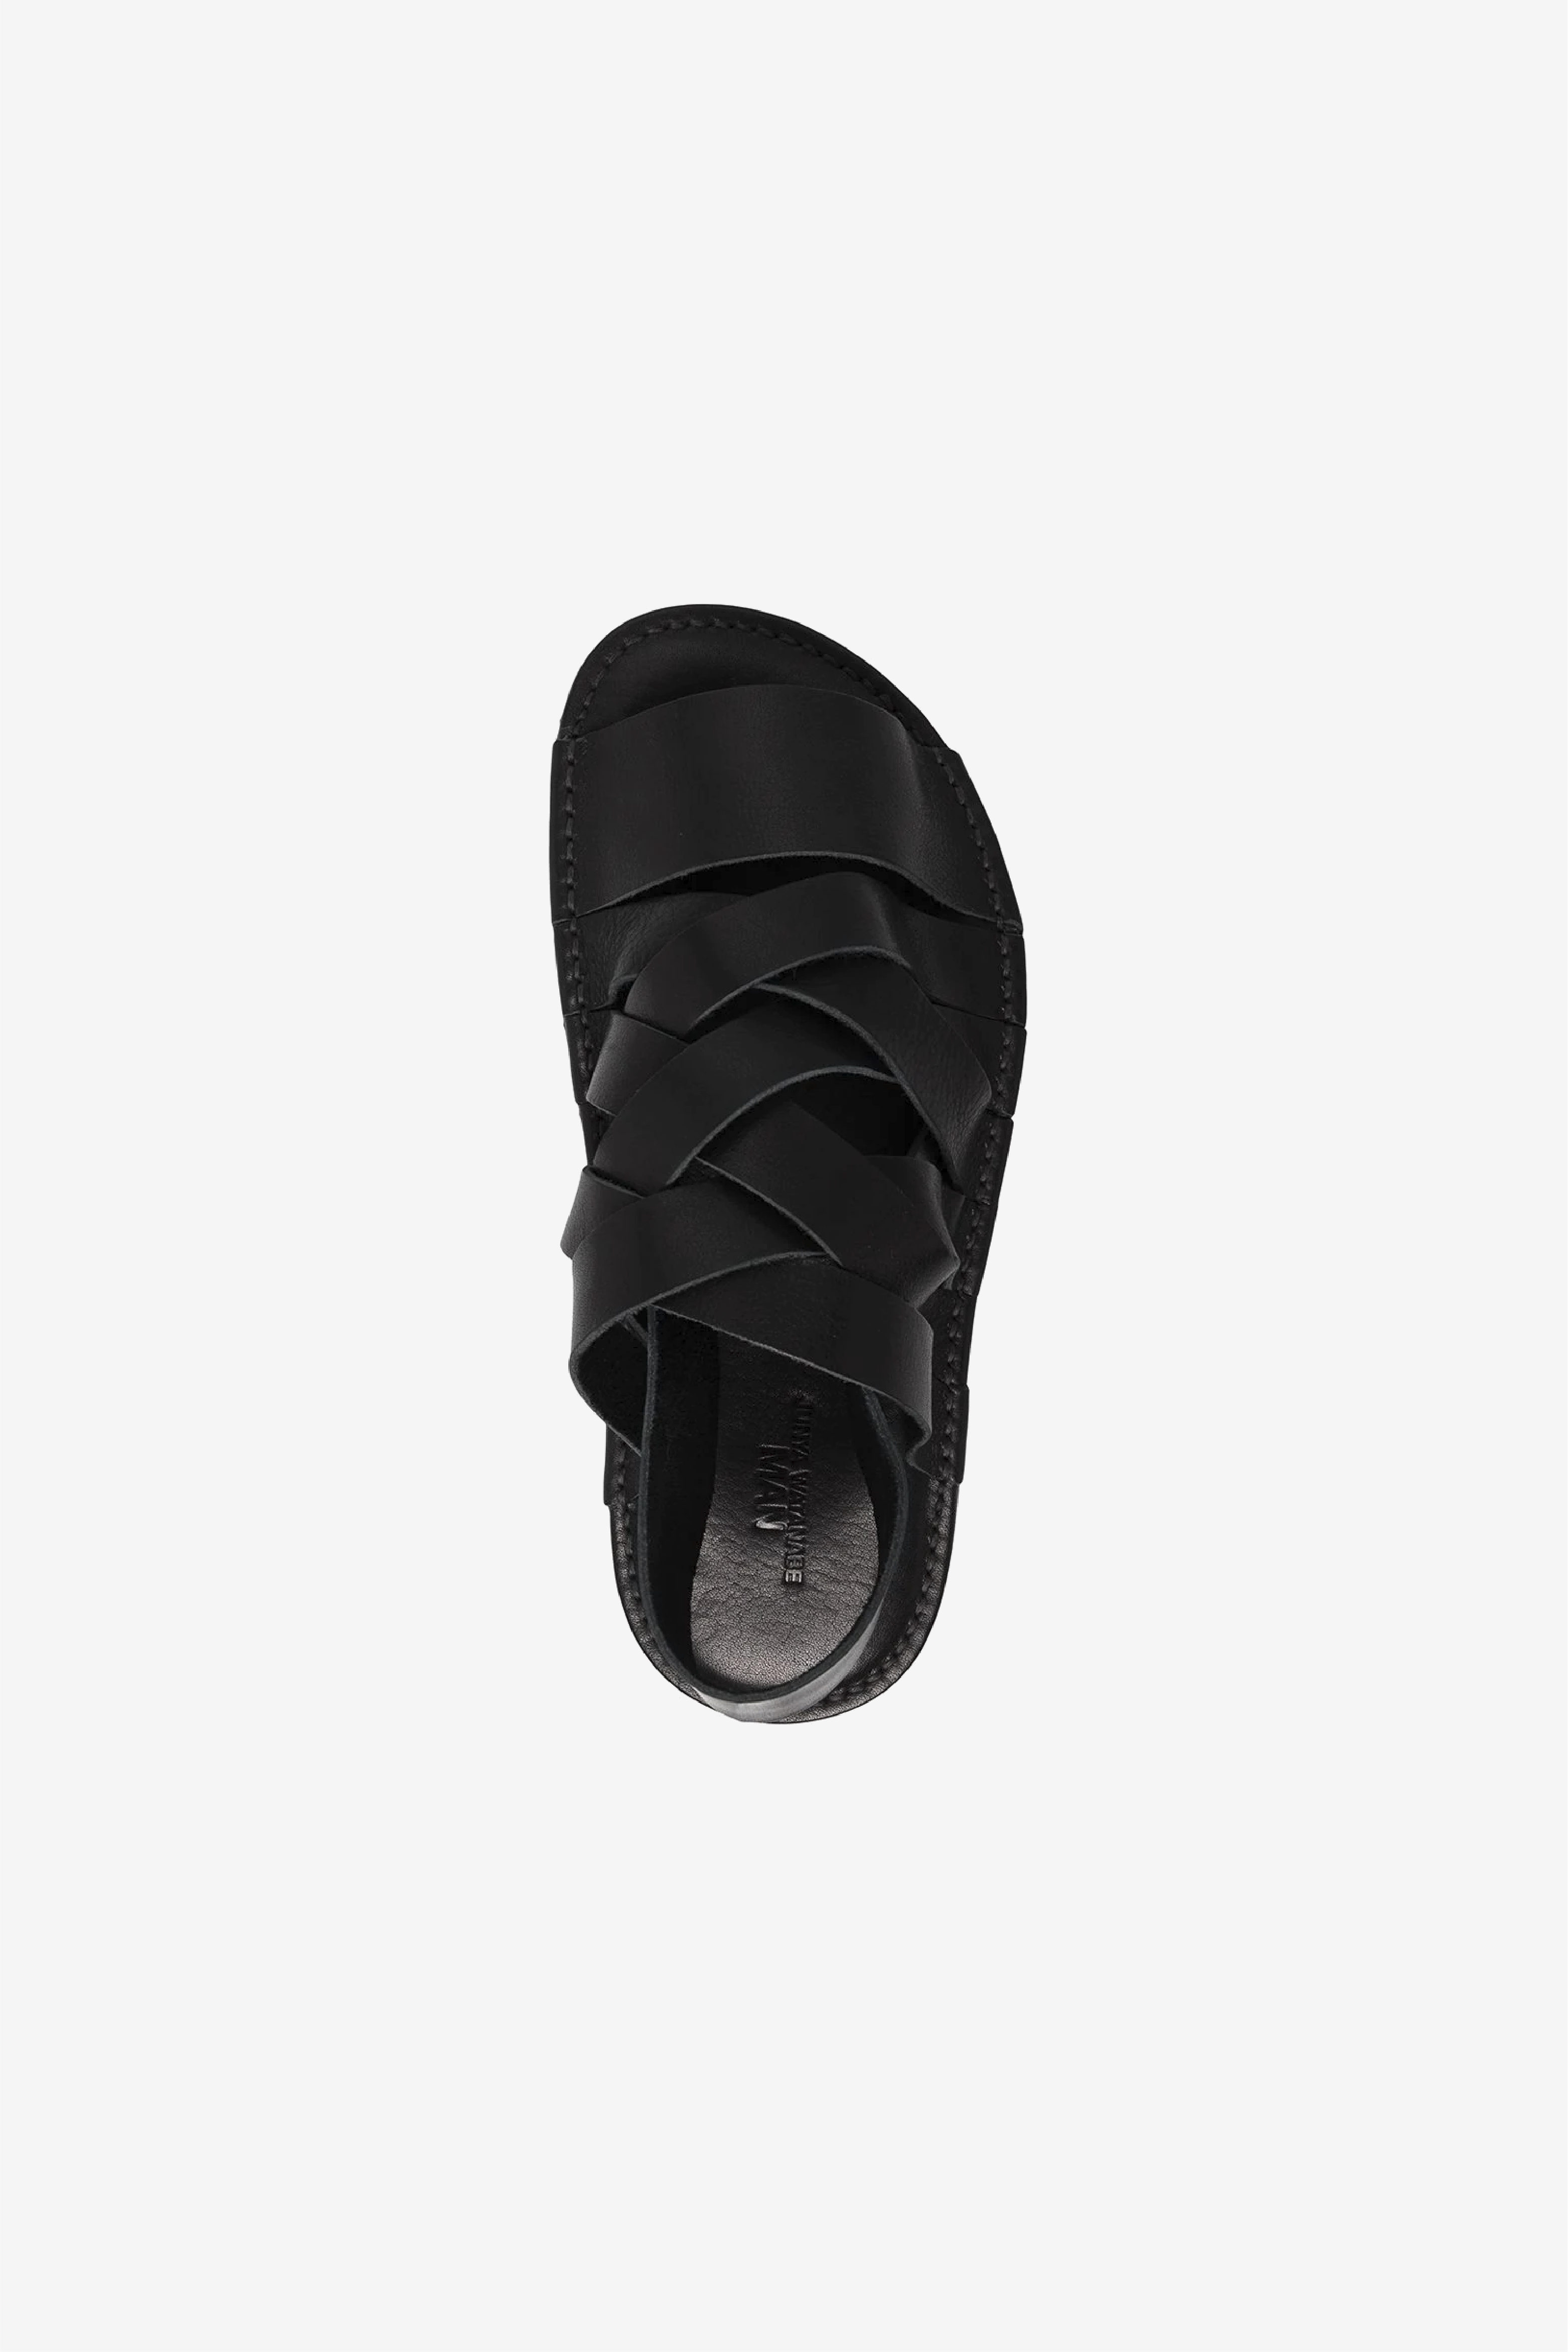 Selectshop FRAME - JUNYA WATANABE MAN Sandal Footwear Dubai